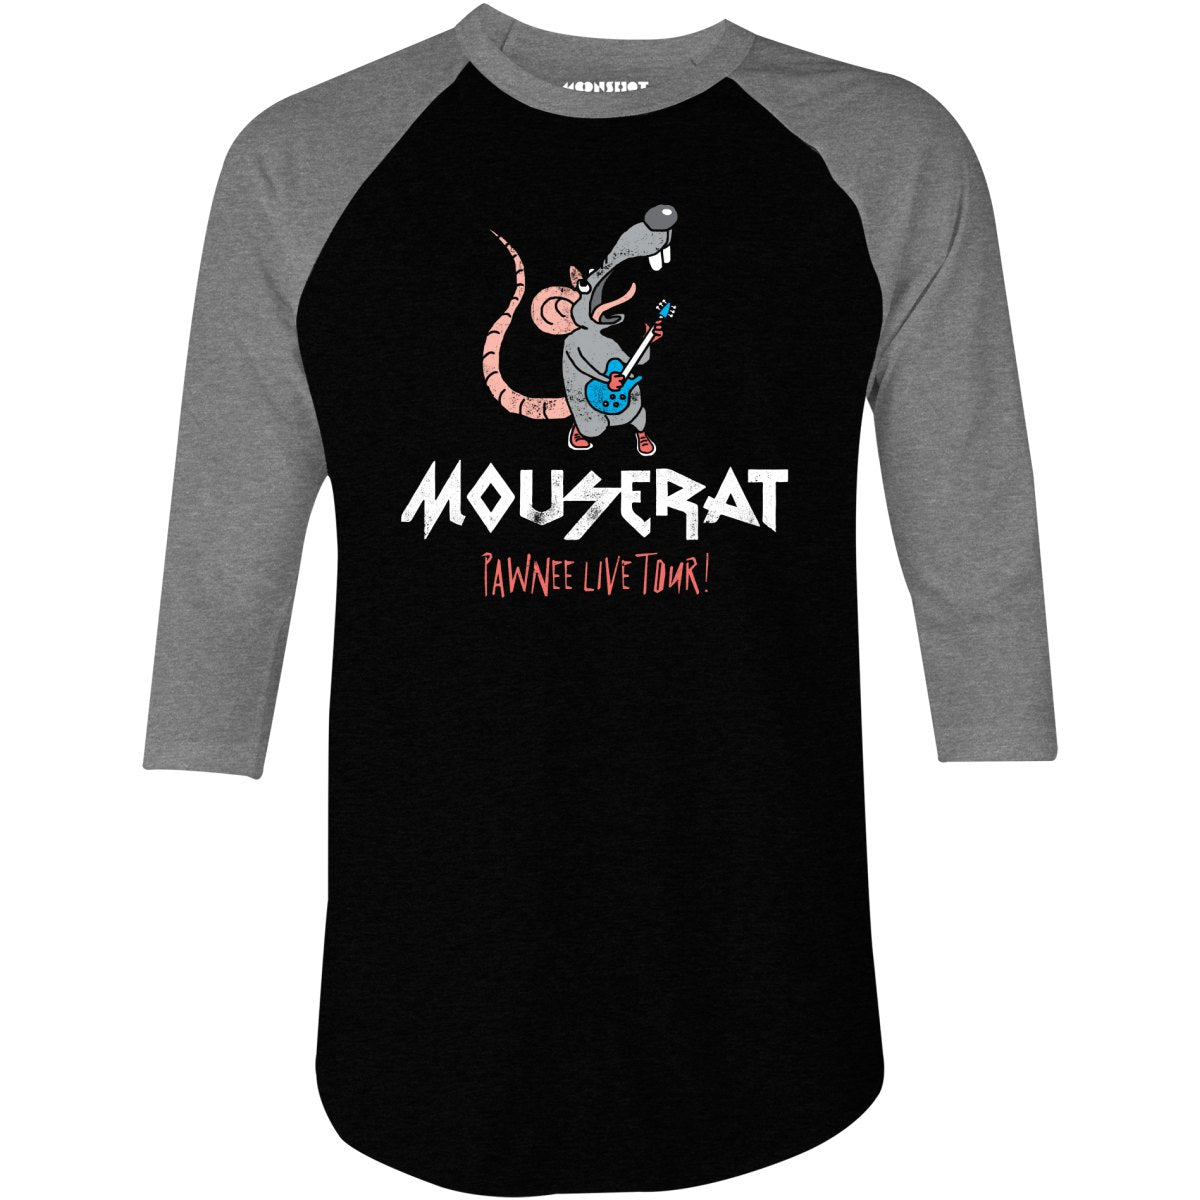 Mouse Rat - Pawnee Live Tour - 3/4 Sleeve Raglan T-Shirt